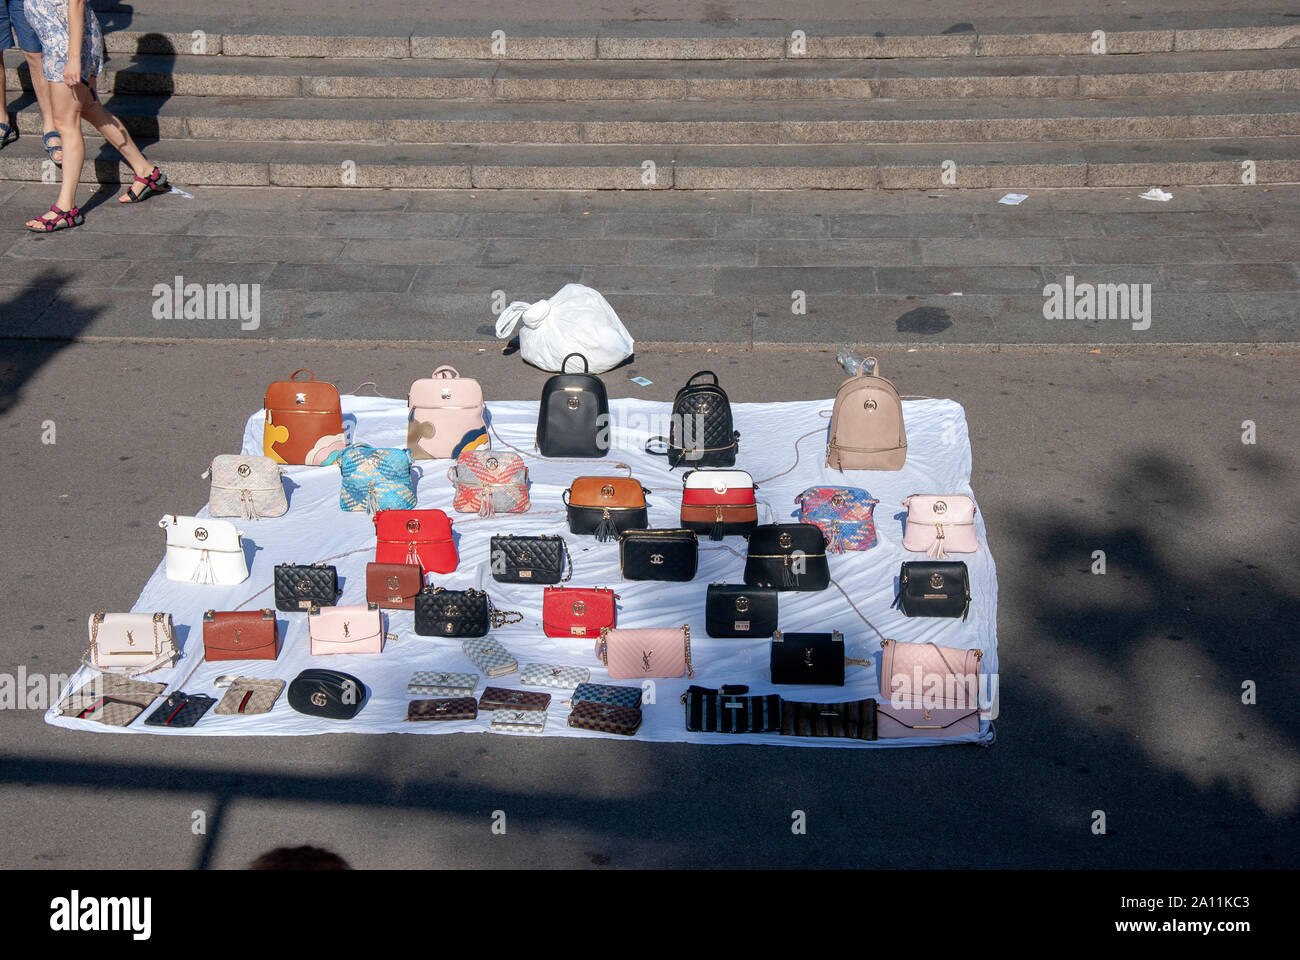 Illegal Street Traders Display of Fake Designer Goods on White Sheet Placa de Catalunya Barcelona Catalonia Spain pavement offering Gucci Michael Kors Stock Photo